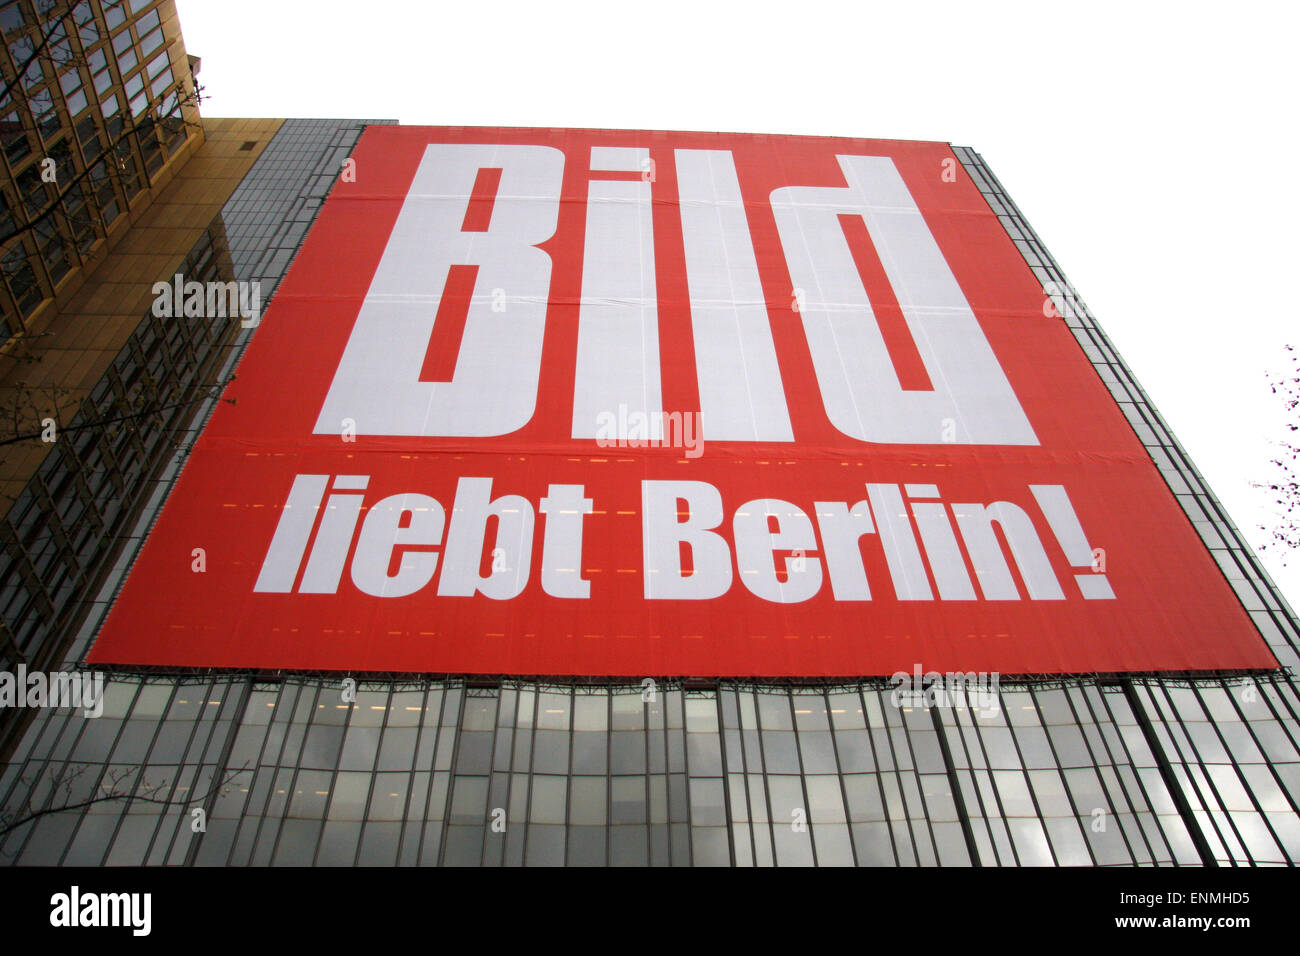 Bild liebt Grossplakat: "Berlín", Axel Springer, Berlin-Krueuberg Zenrale. Foto de stock